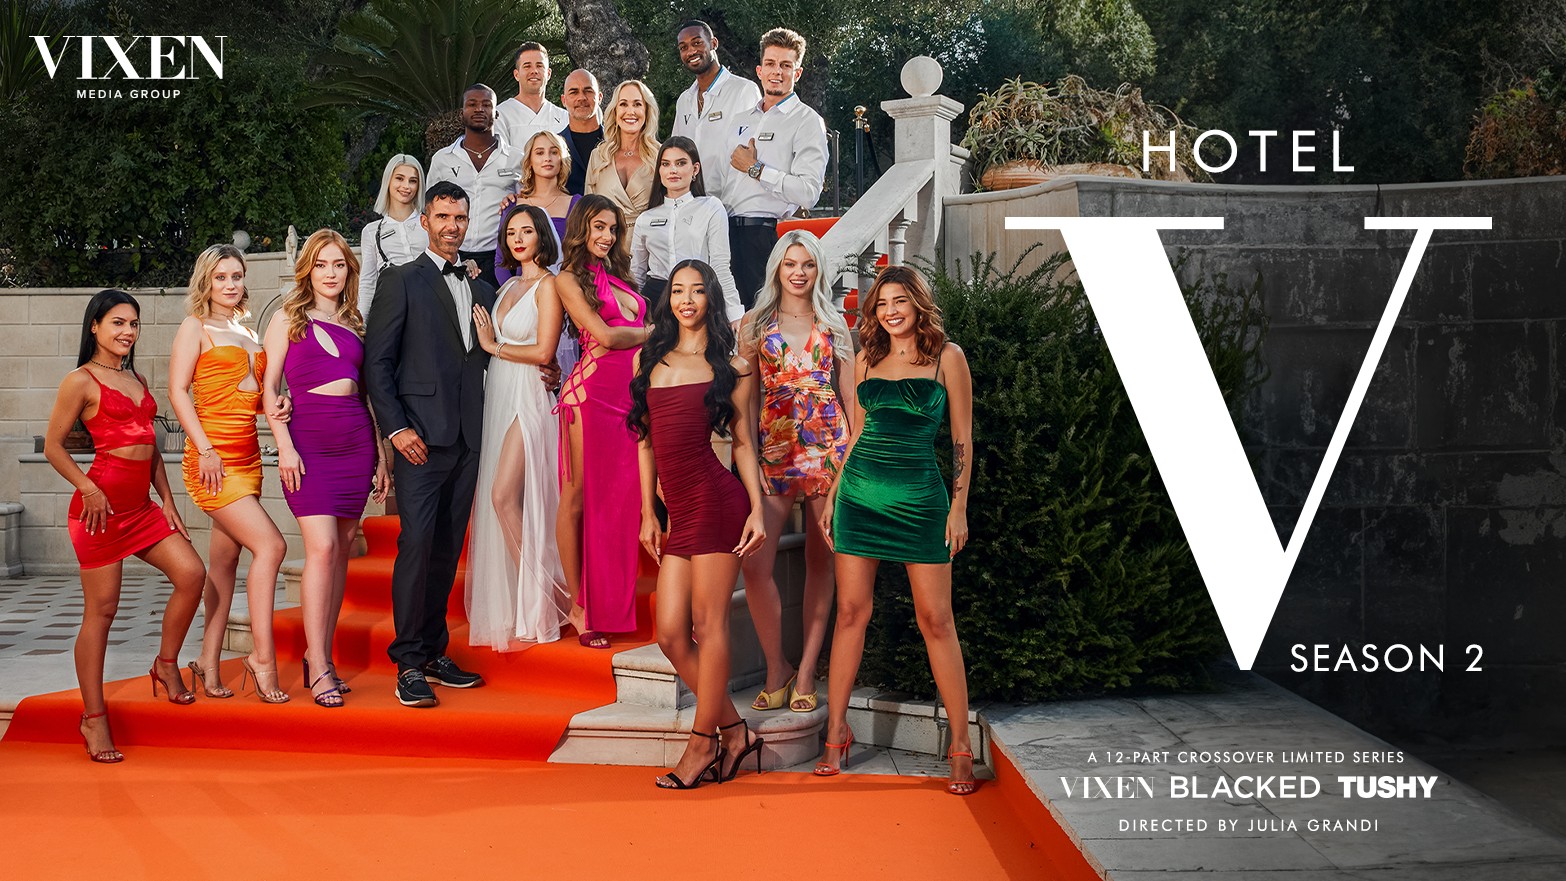 Vixen Media Group’s ‘Hotel Vixen’ Returns for a Star-Studded Second Season